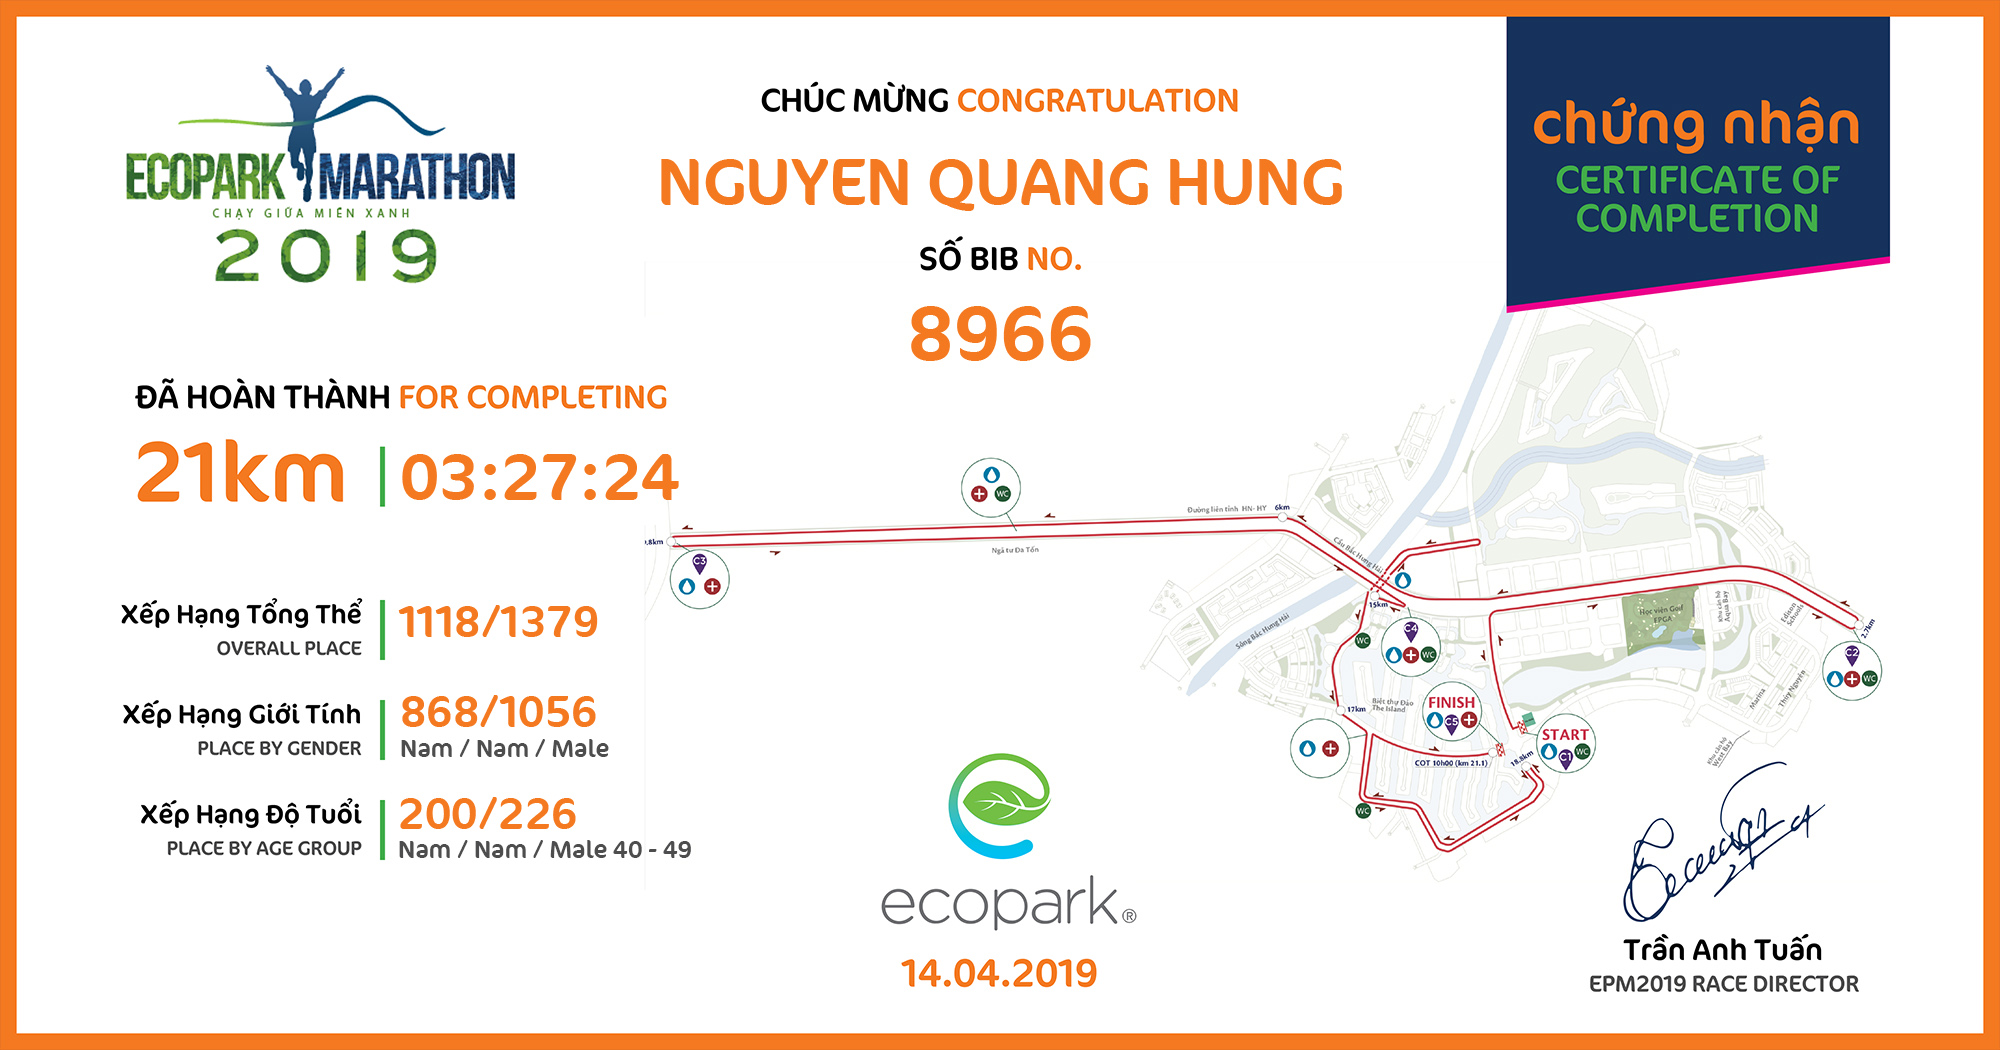 8966 - Nguyen Quang Hung